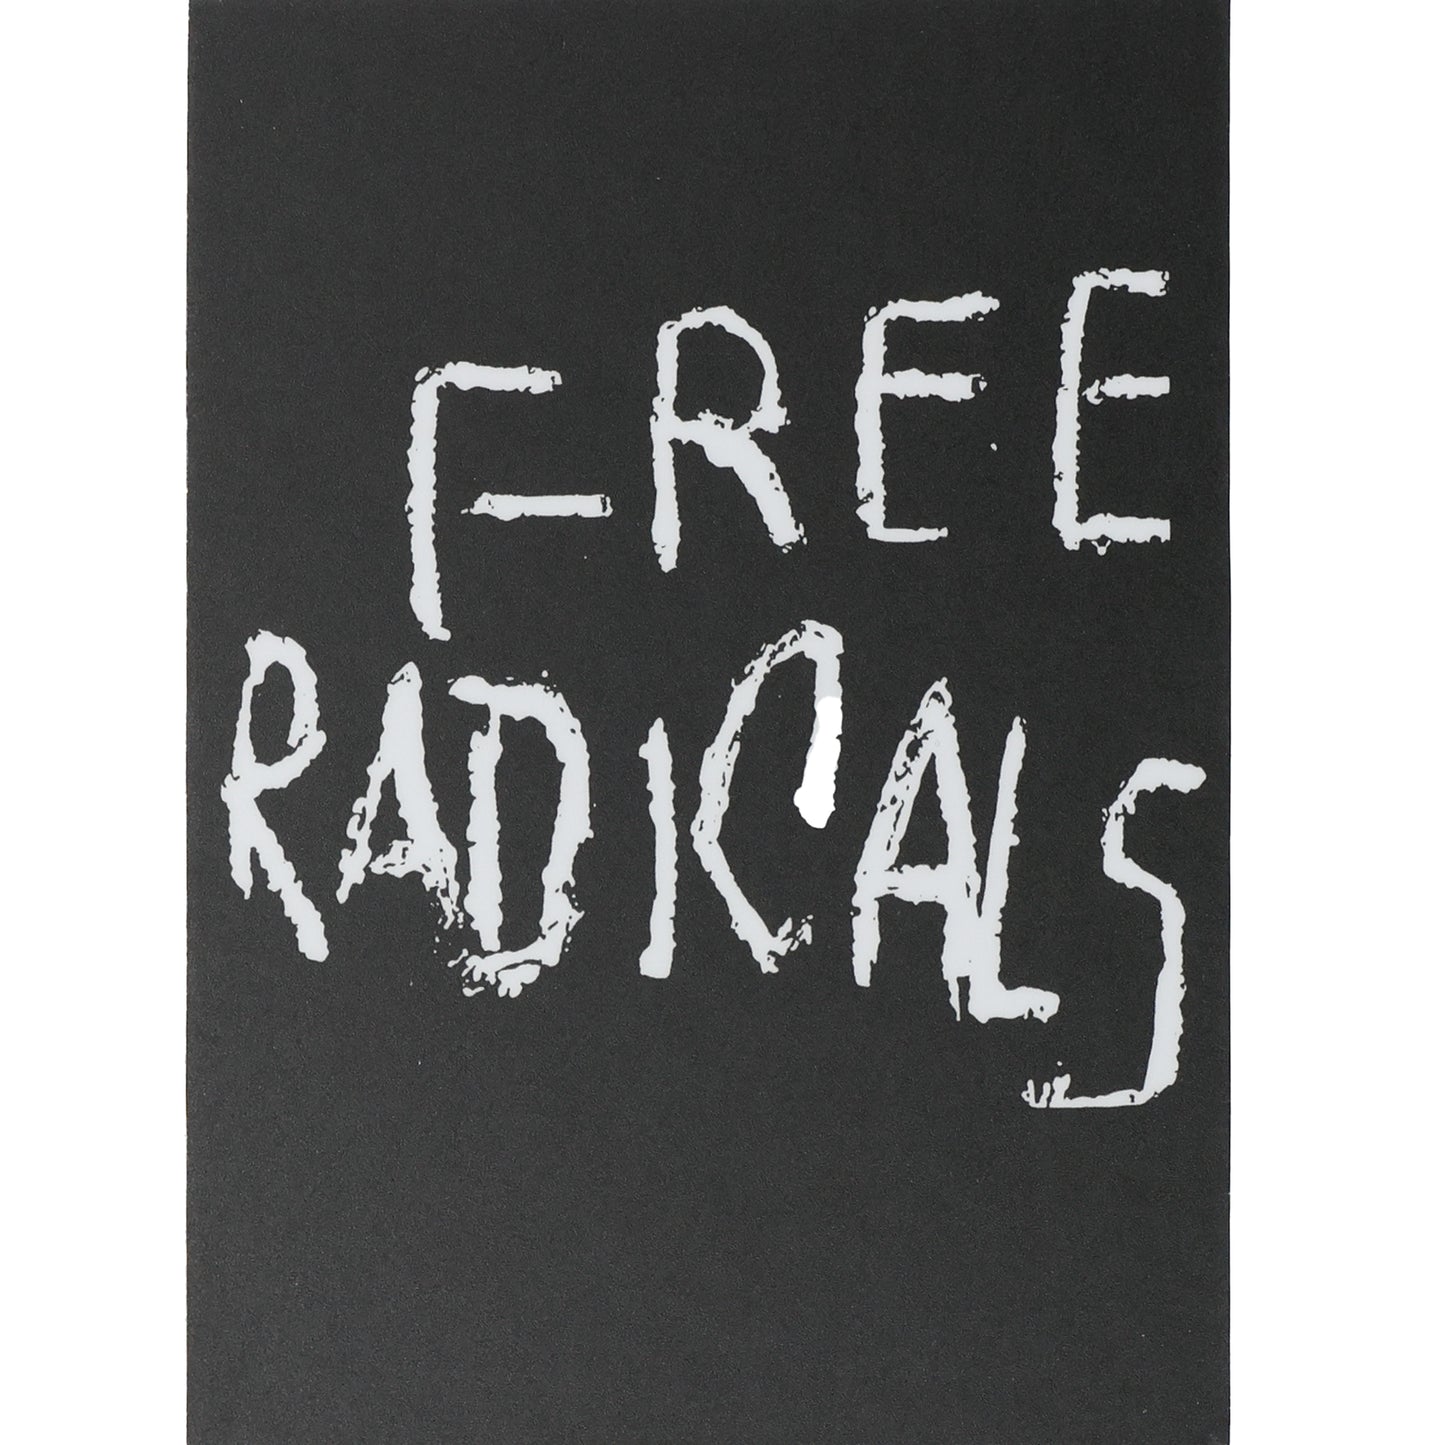 Free Radicals Solo Journal